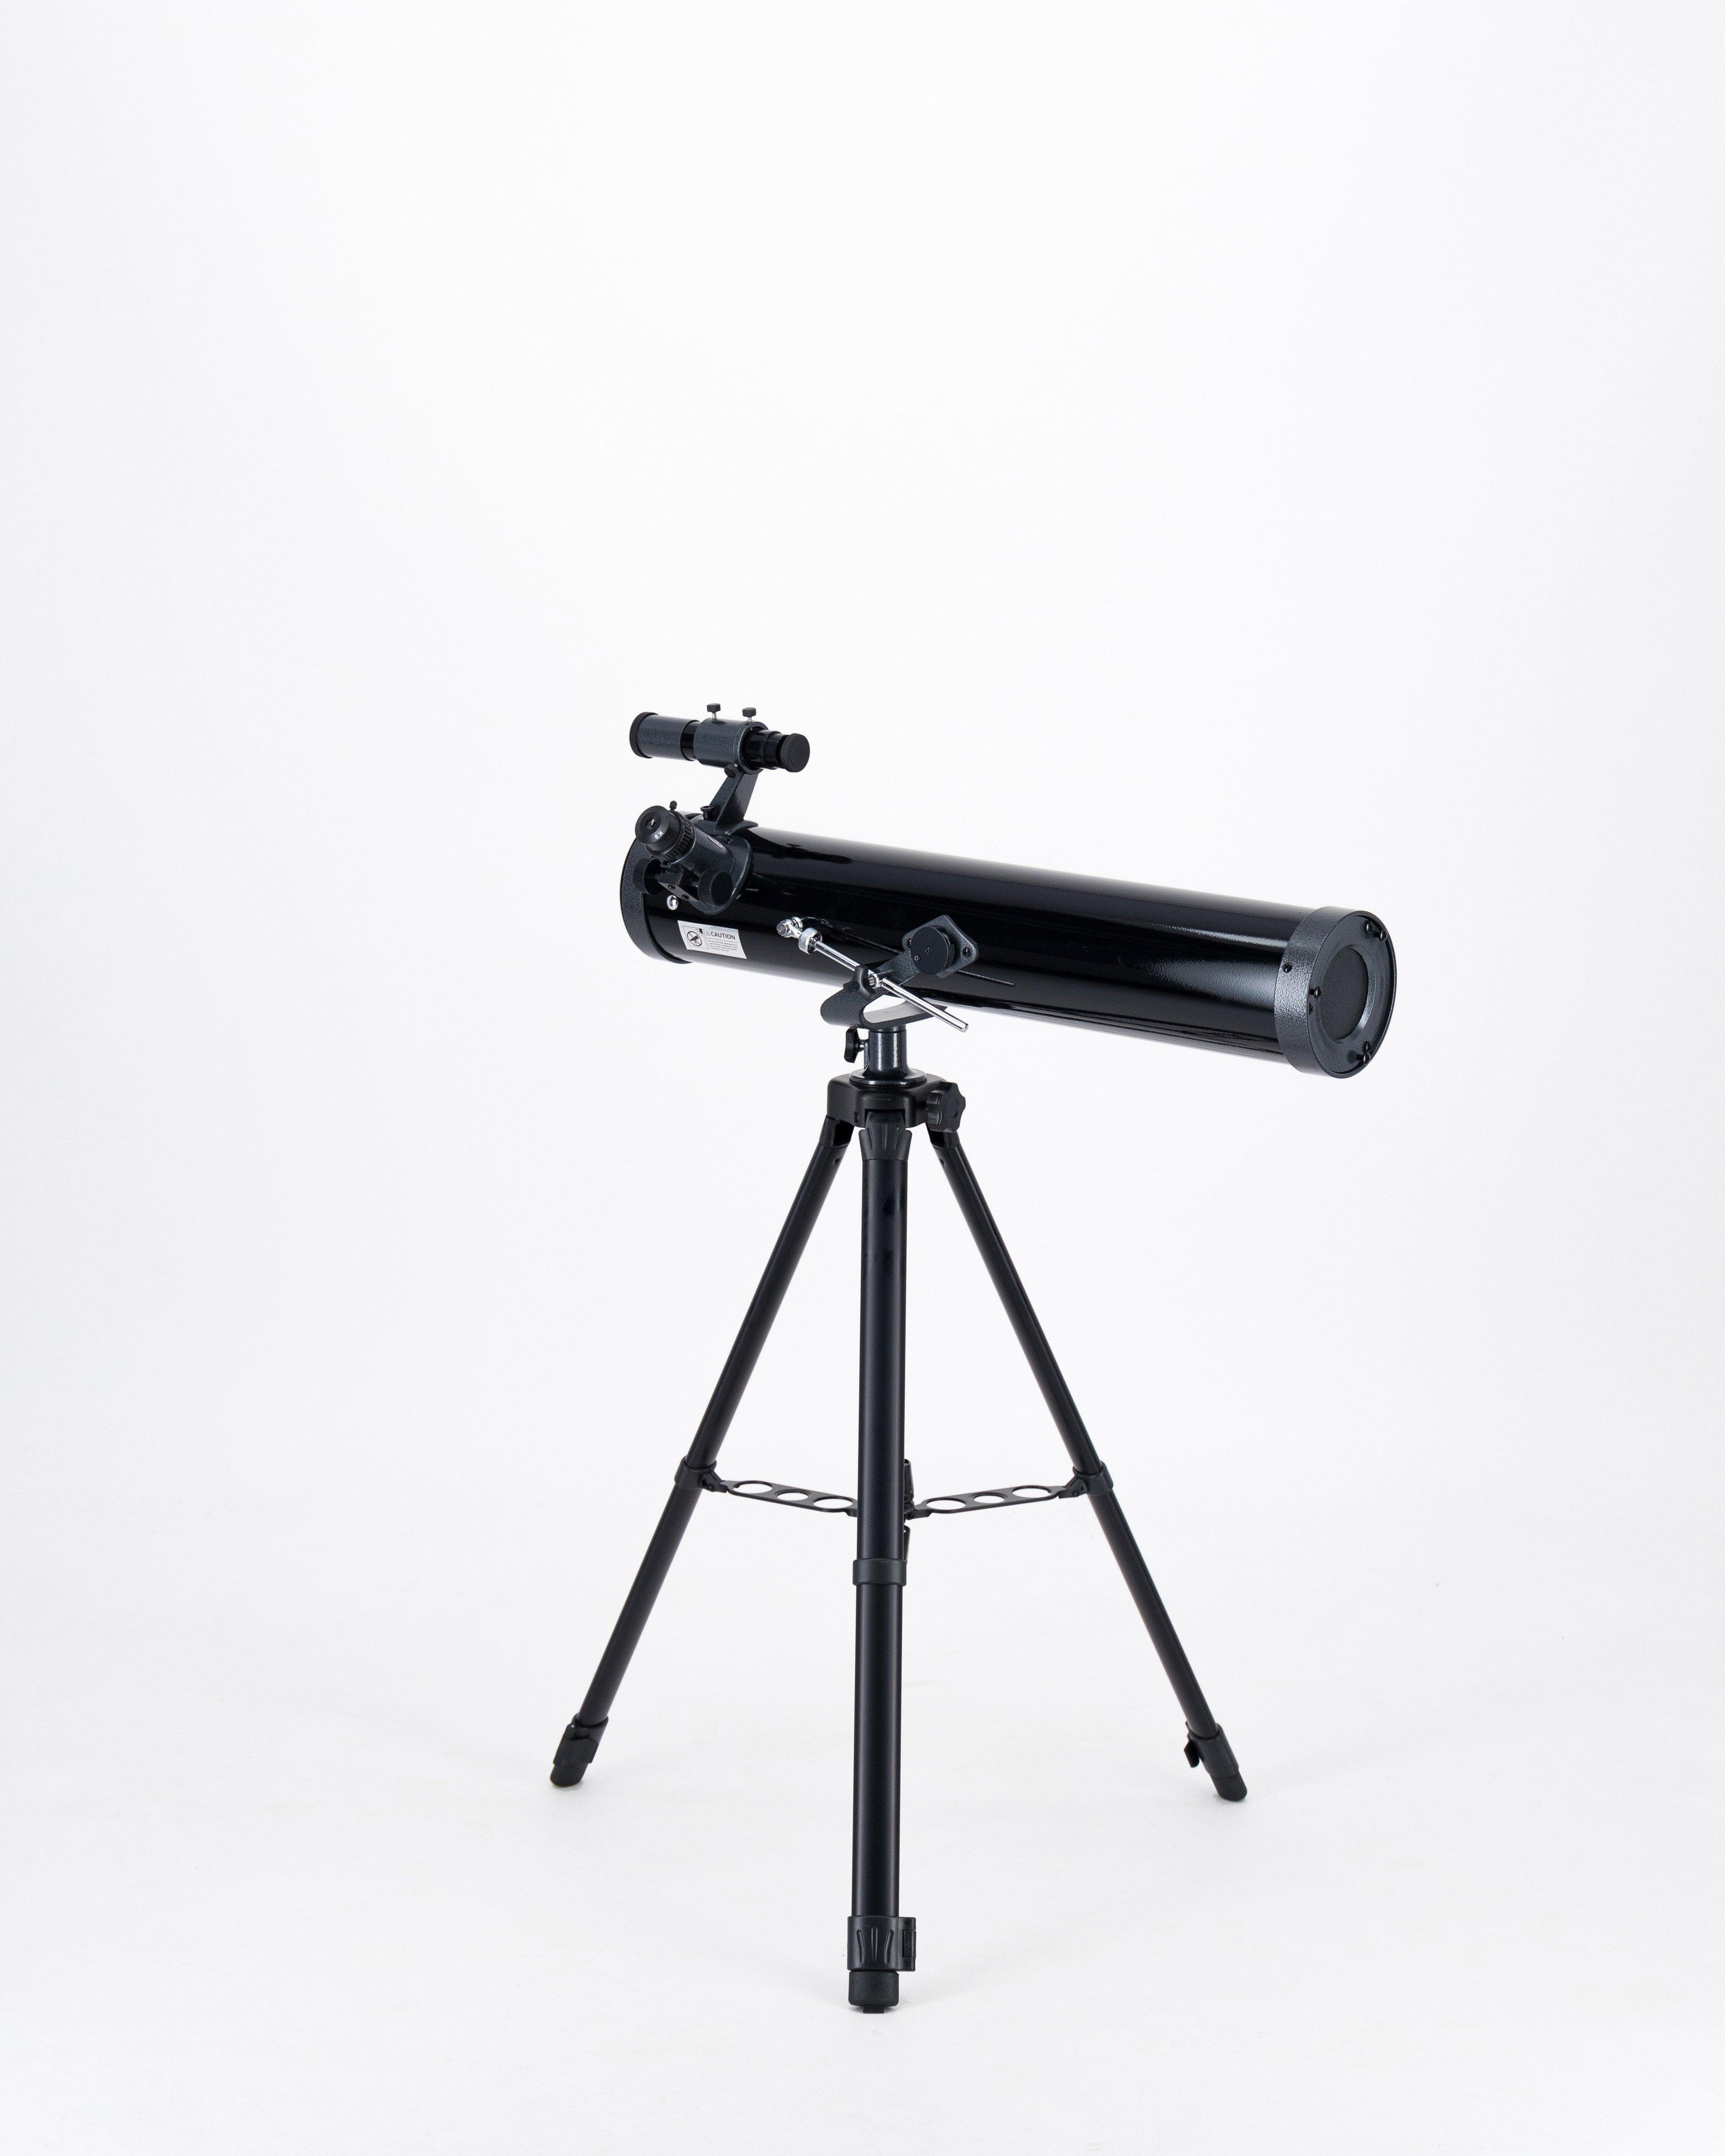 Malkin Newtonian 35x-78x Telescope -  Black